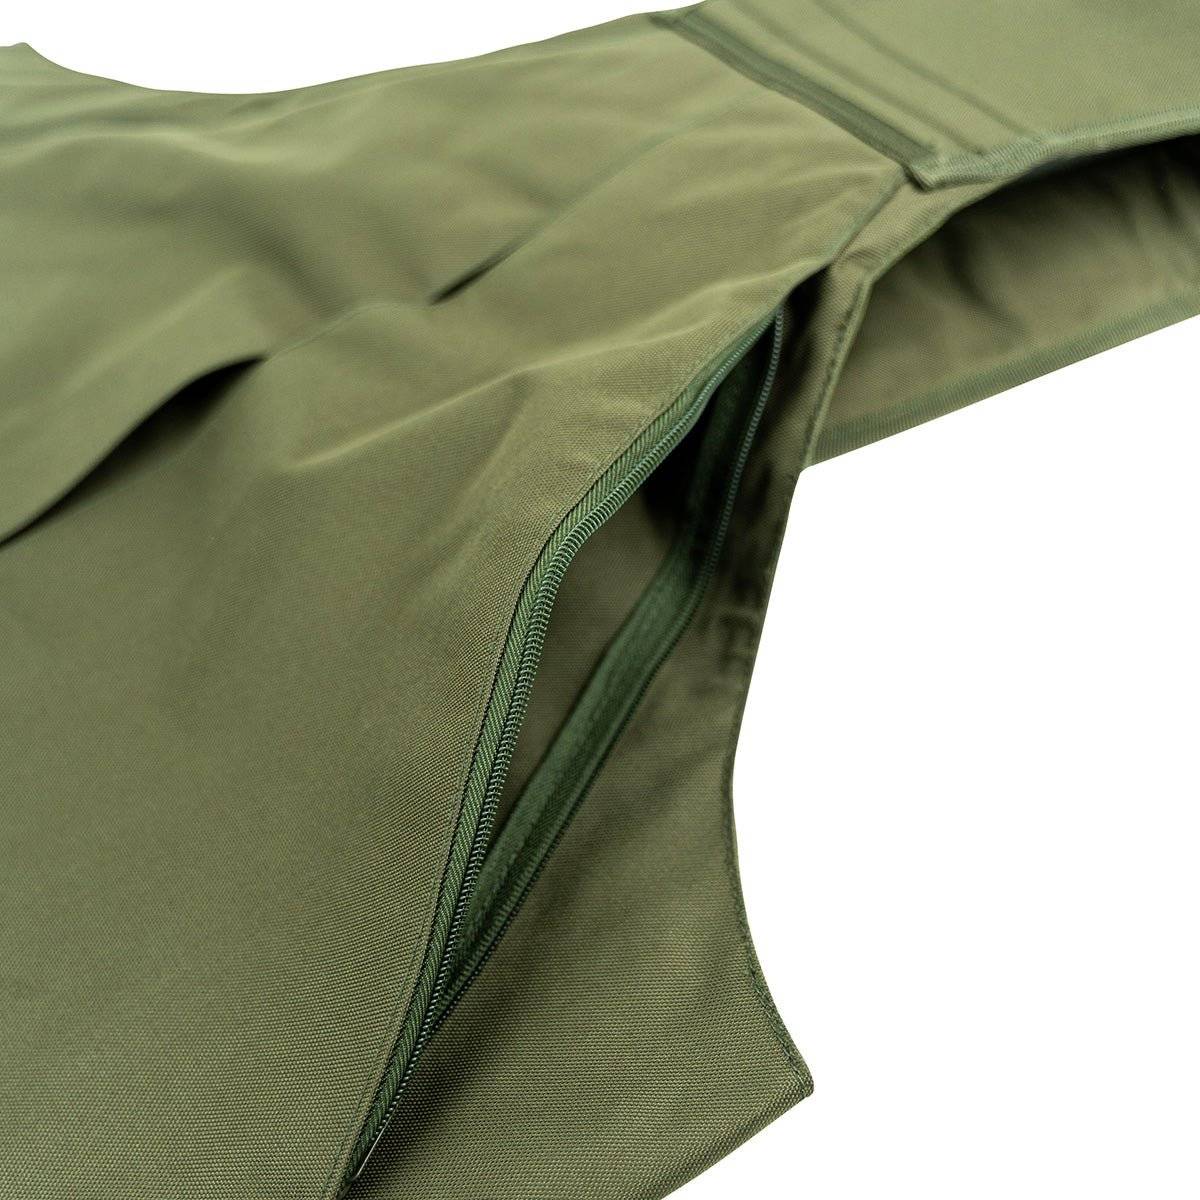 Jack Pyke Dog Handlers Vest Olive Green - John Bull Clothing